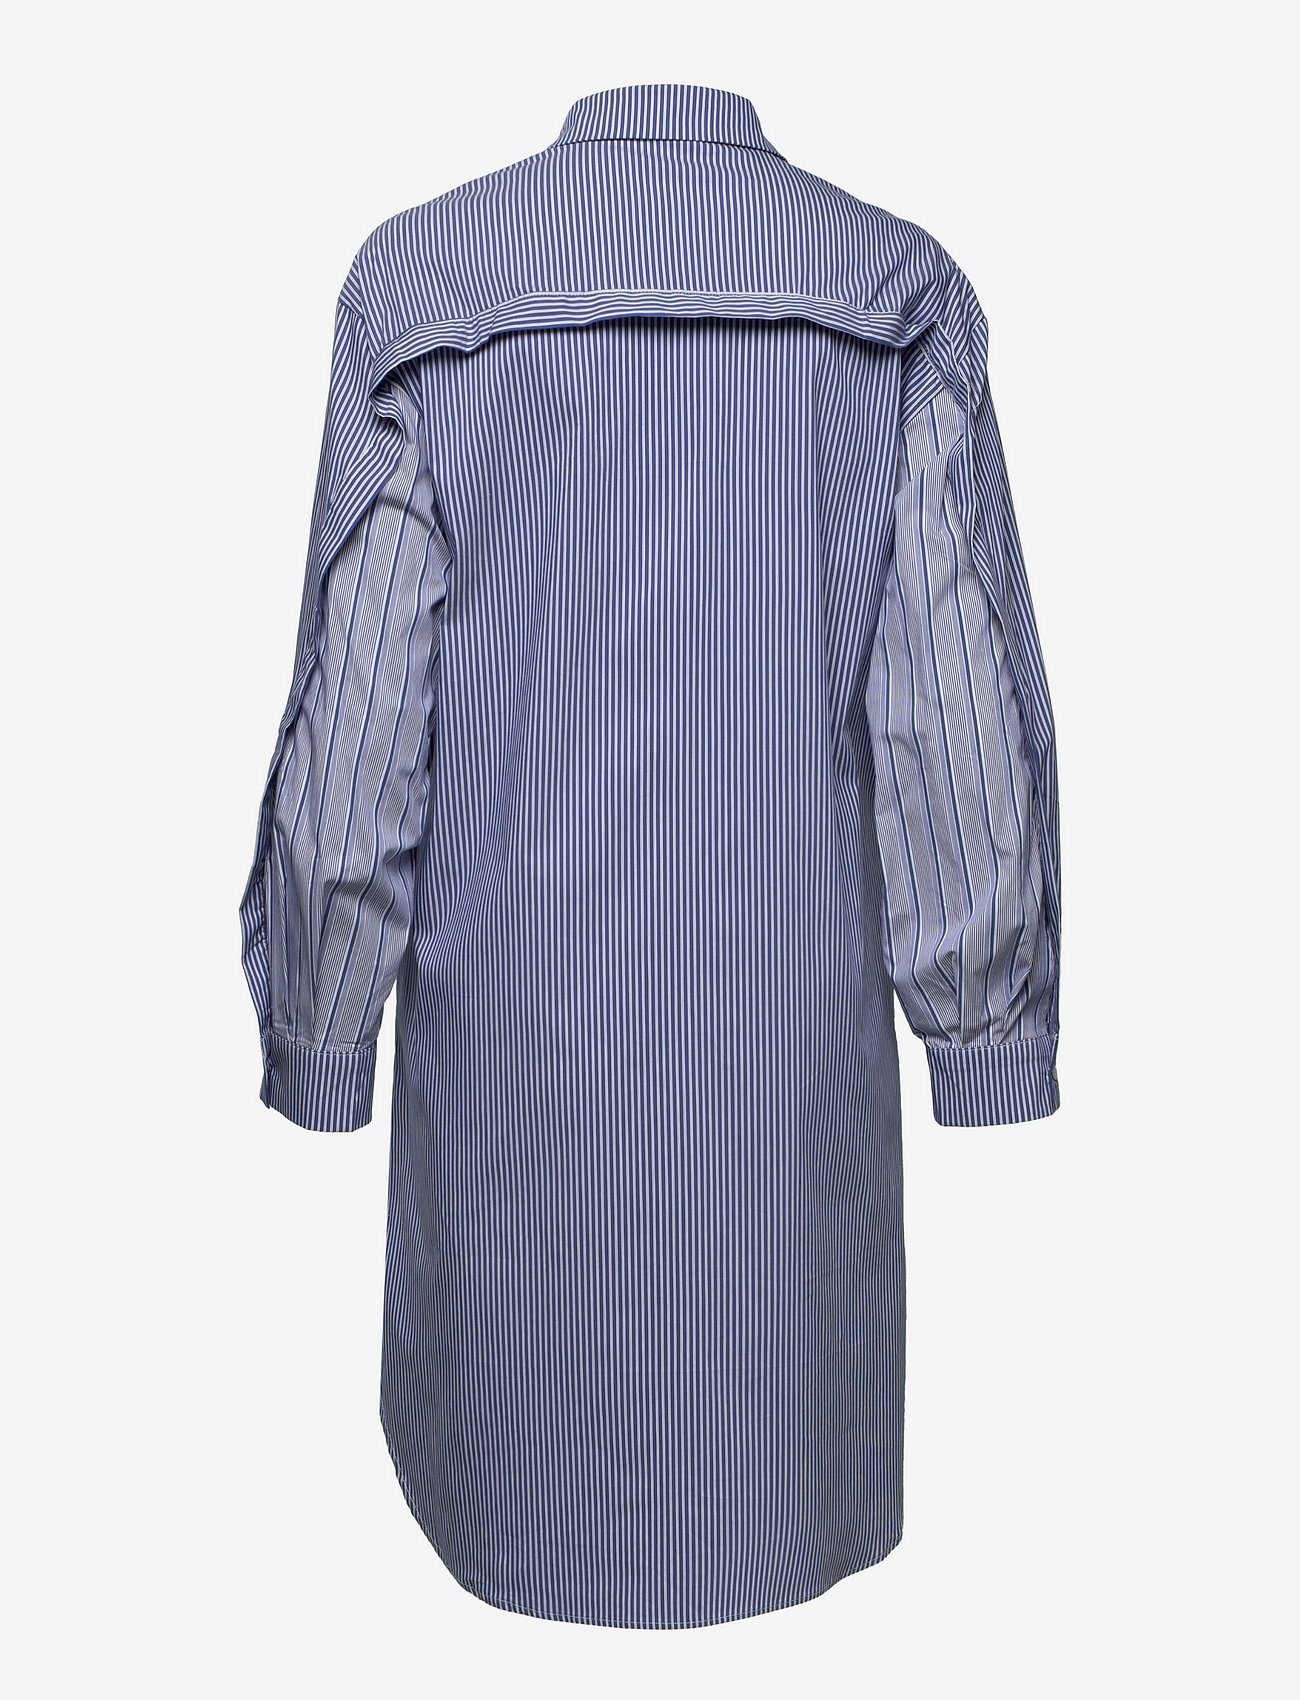 Culture - CUtraba Shirt - kobiety - cashmere blue stripe - 1